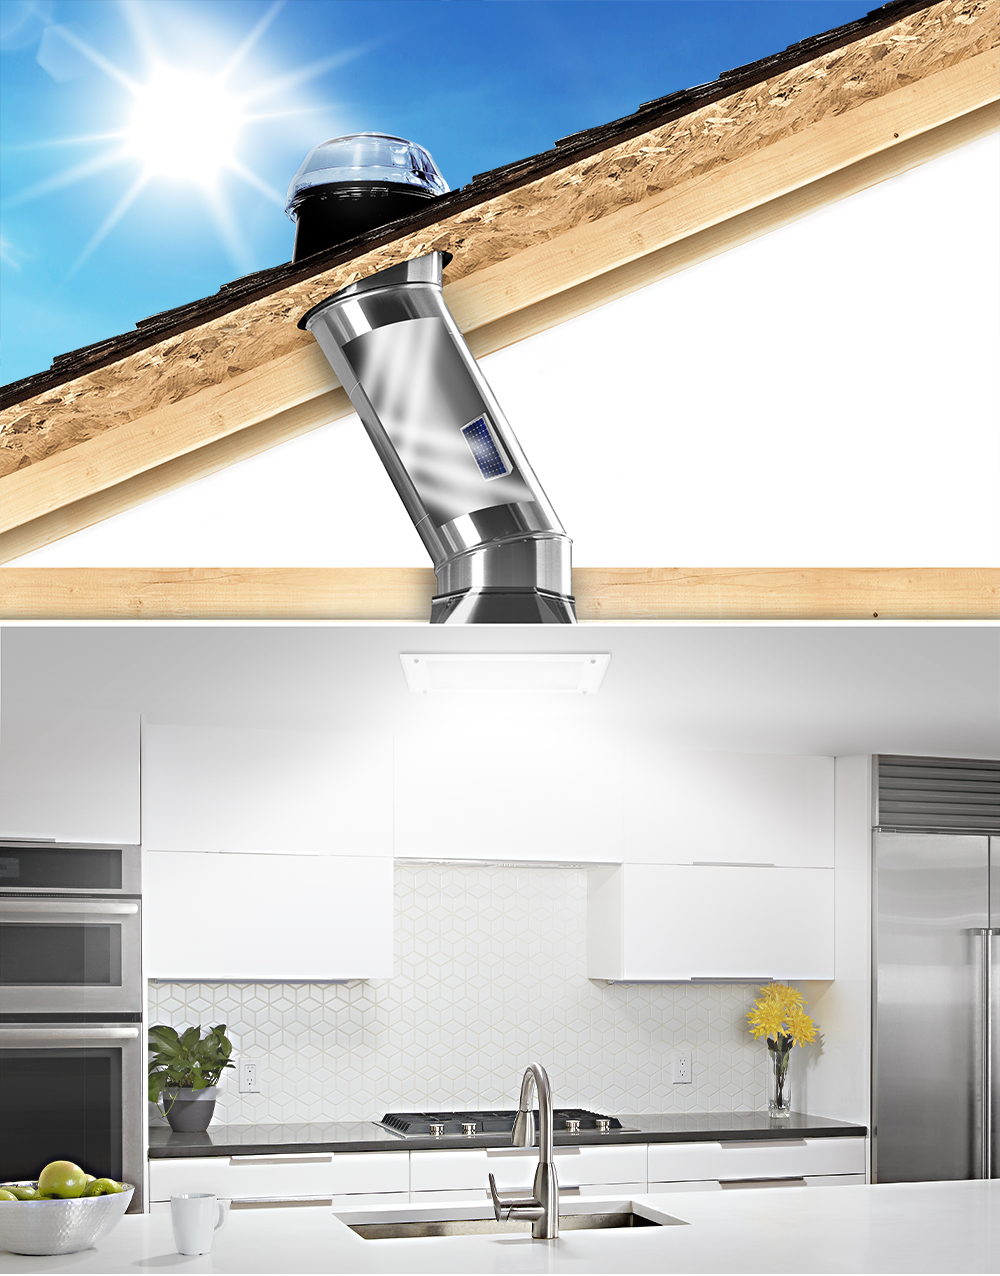 Residential kitchen with Solatube tubular skylight.jpg